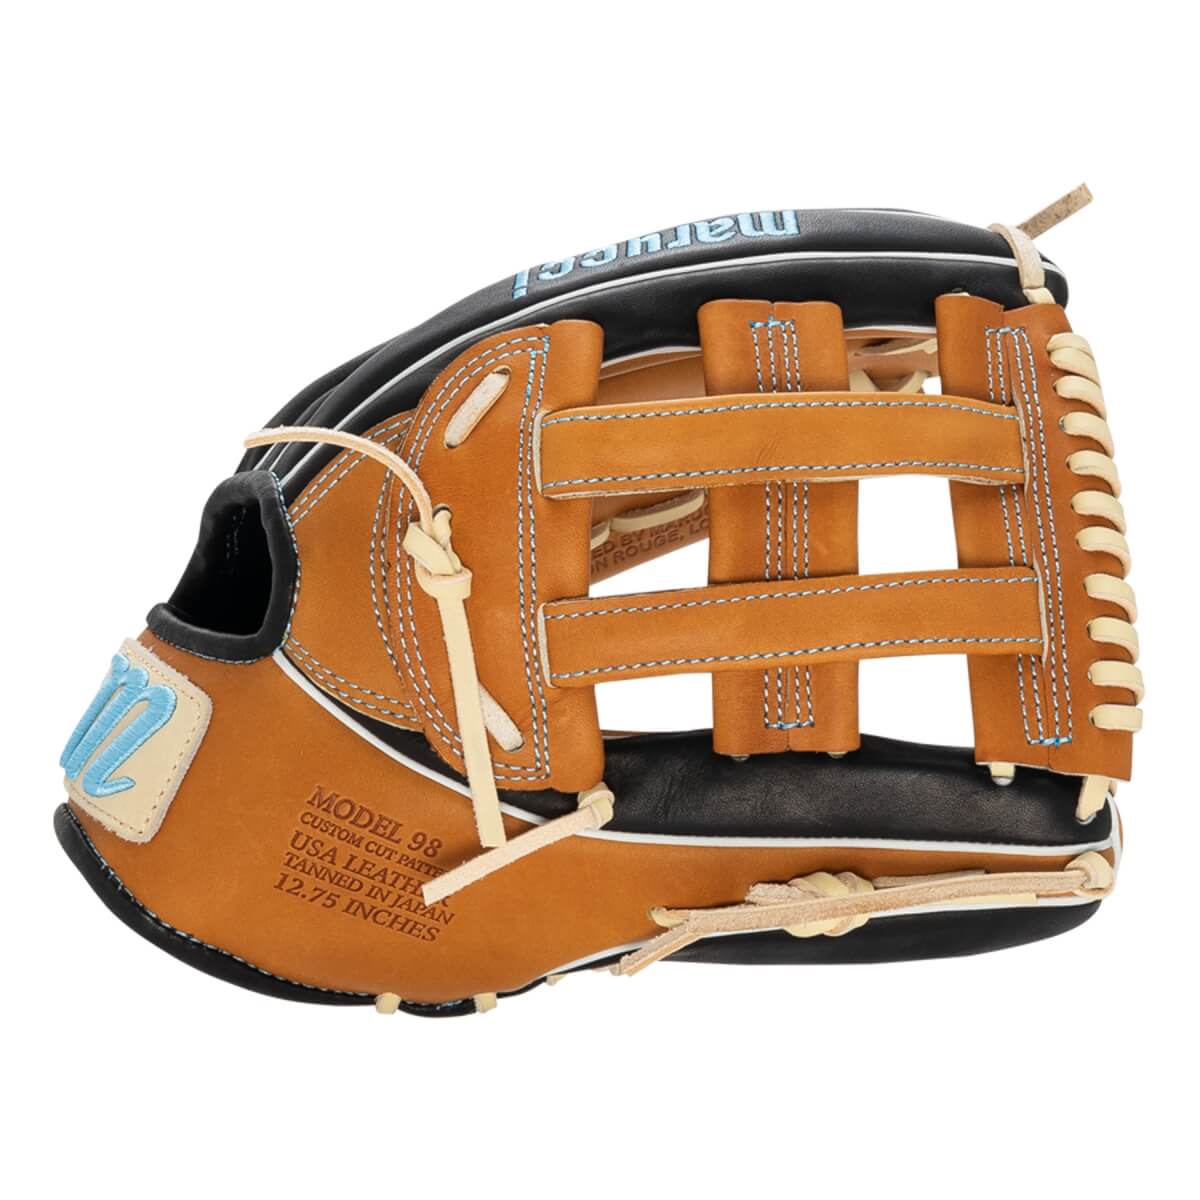 Marucci Cypress M Type 12.75" Baseball Glove: MFG2CY98R3-BK/TF